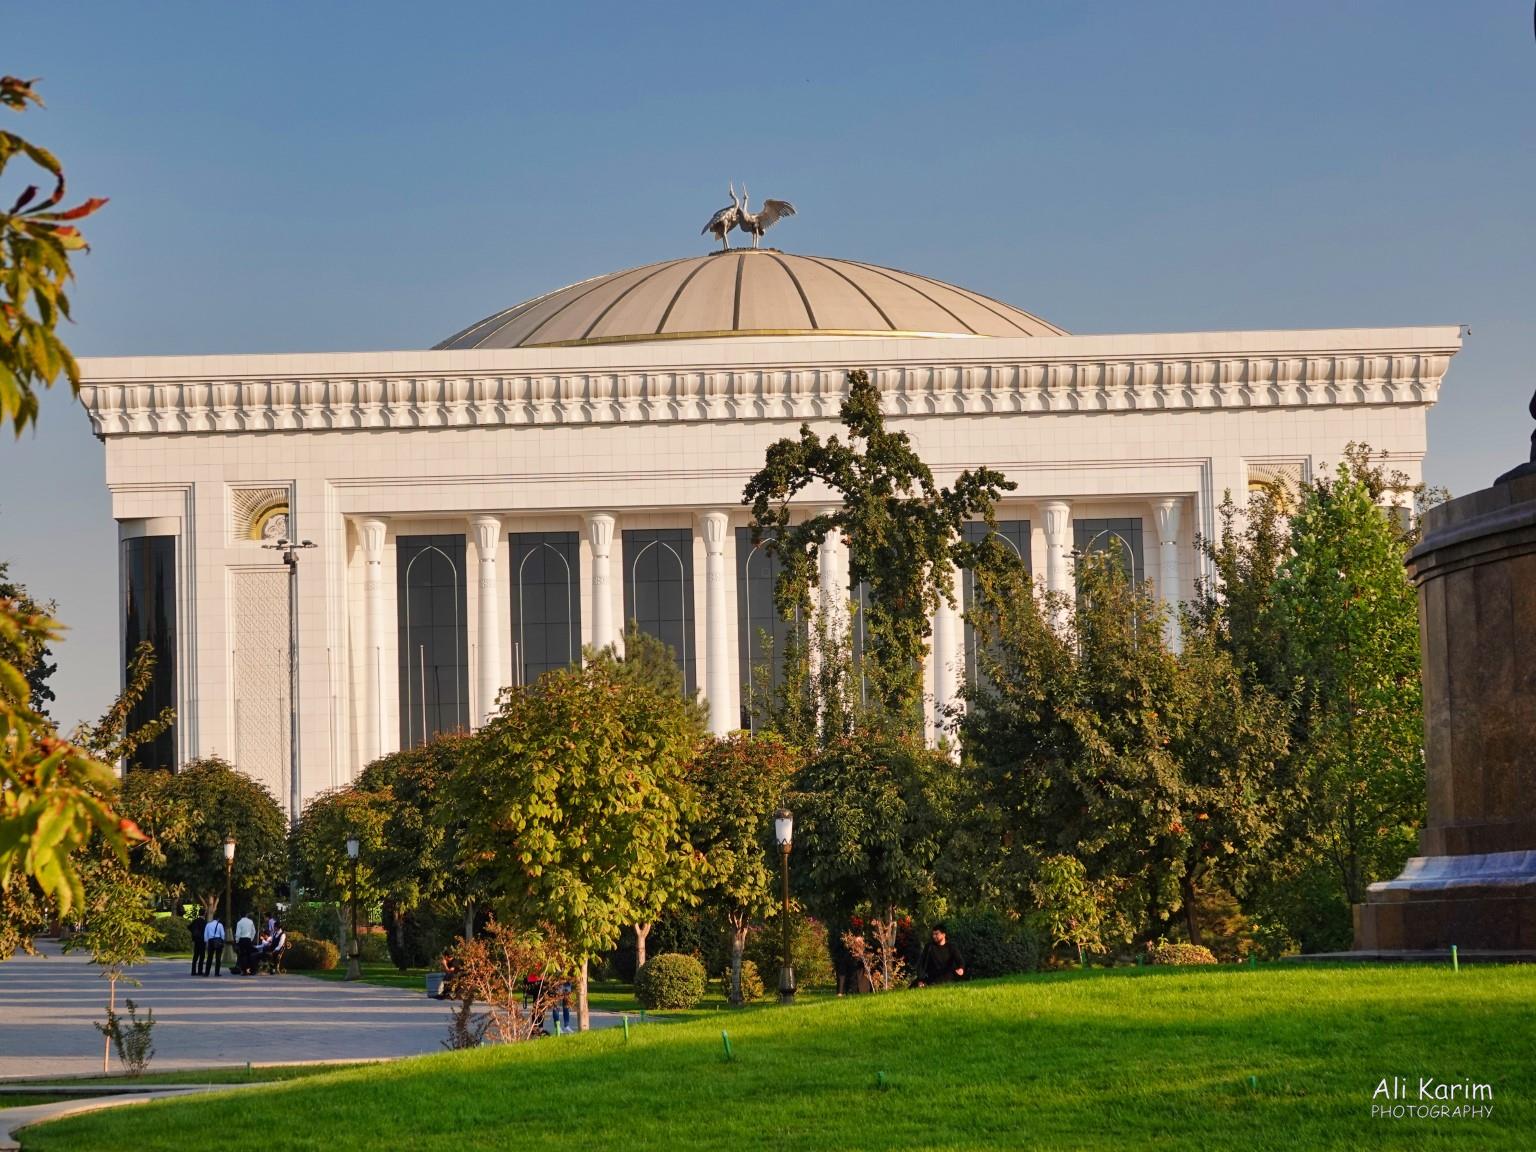 Tashkent, Oct 2019, Another interesting building in Amir Timur Square